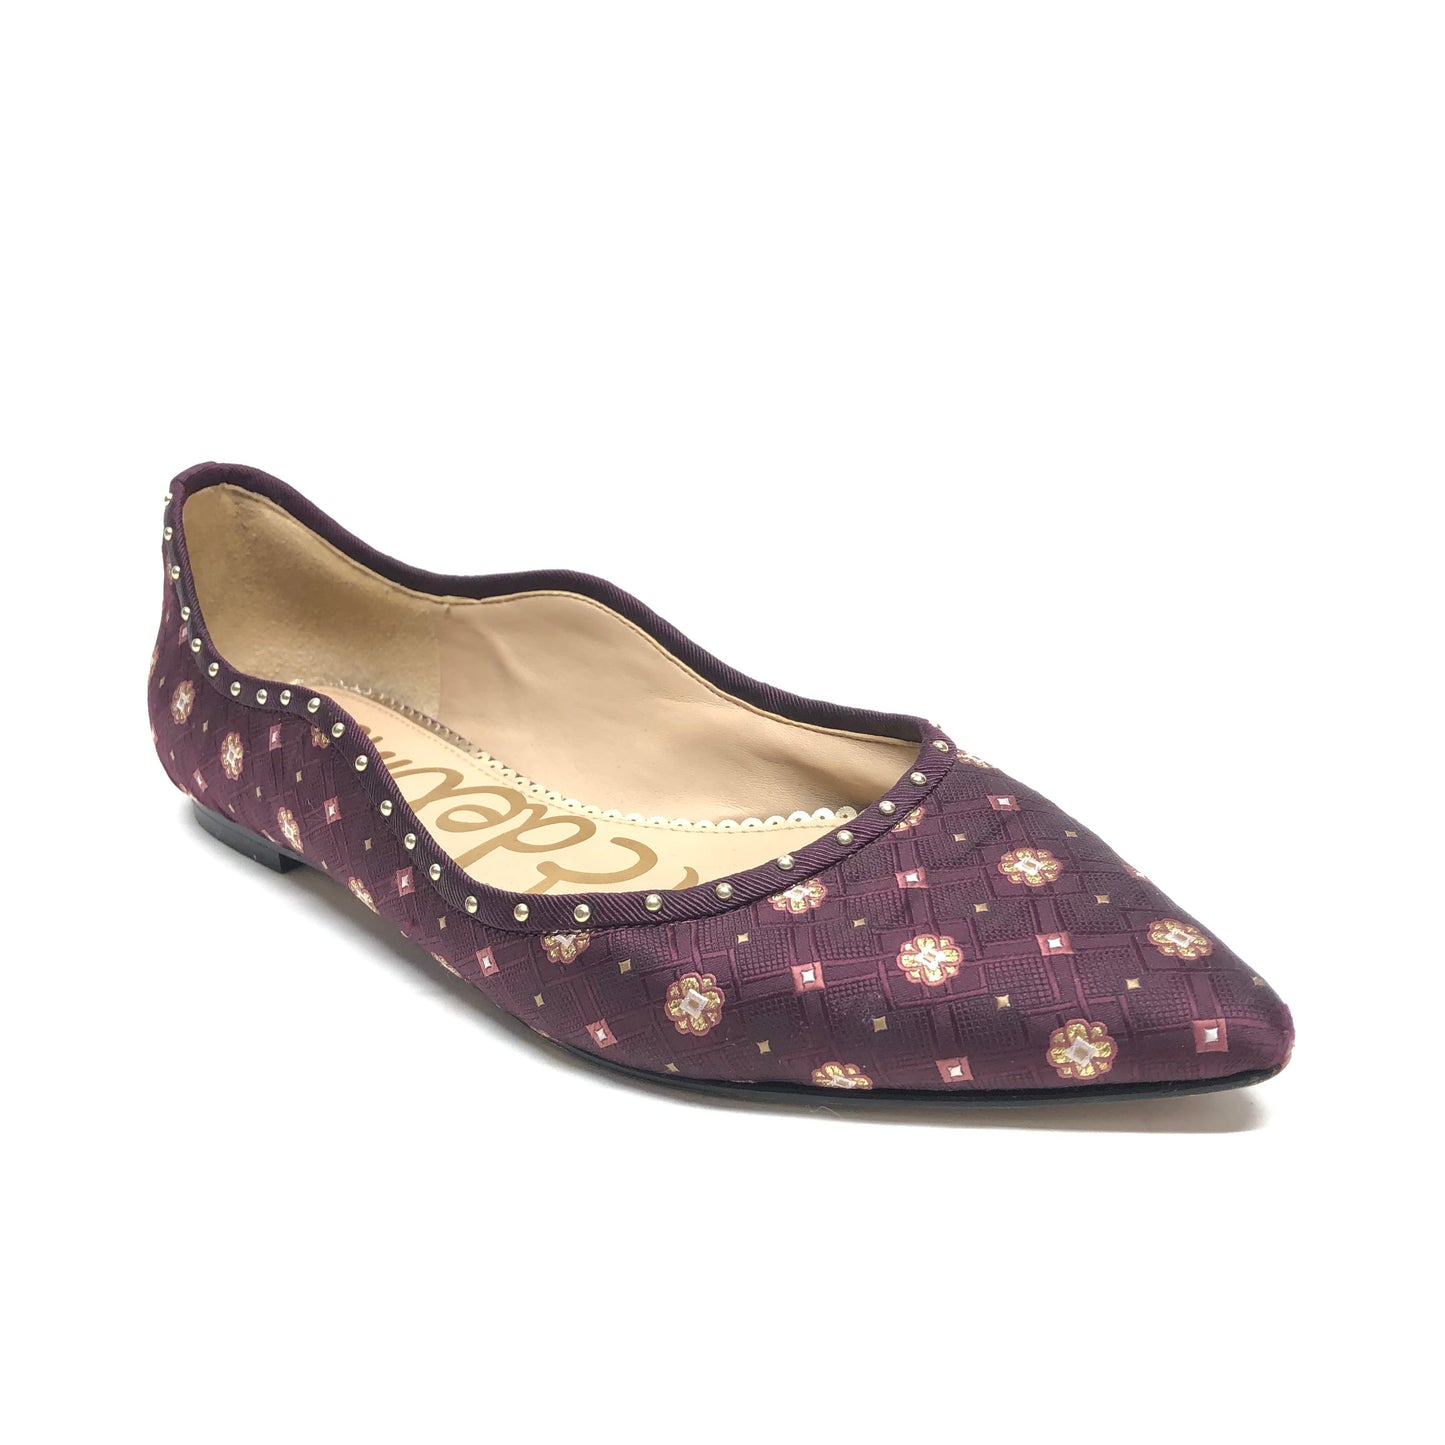 Shoes Flats Ballet By Sam Edelman  Size: 8